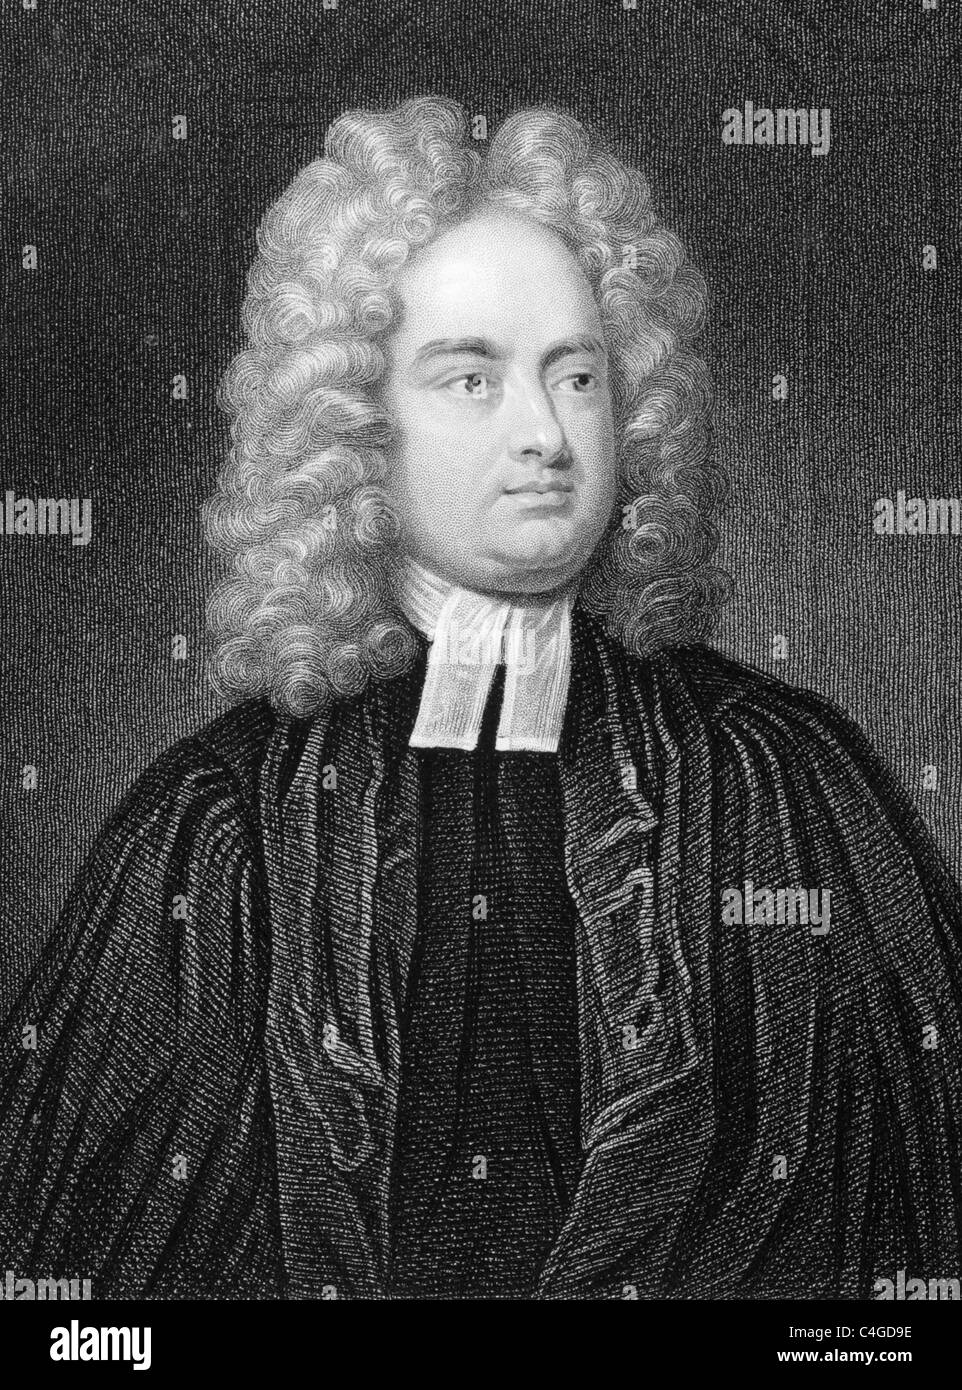 Jonathan Swift (1667-1745) on engraving from 1800s. Irish satirist, essayist, political pamphleteer, poet and cleric. Stock Photo